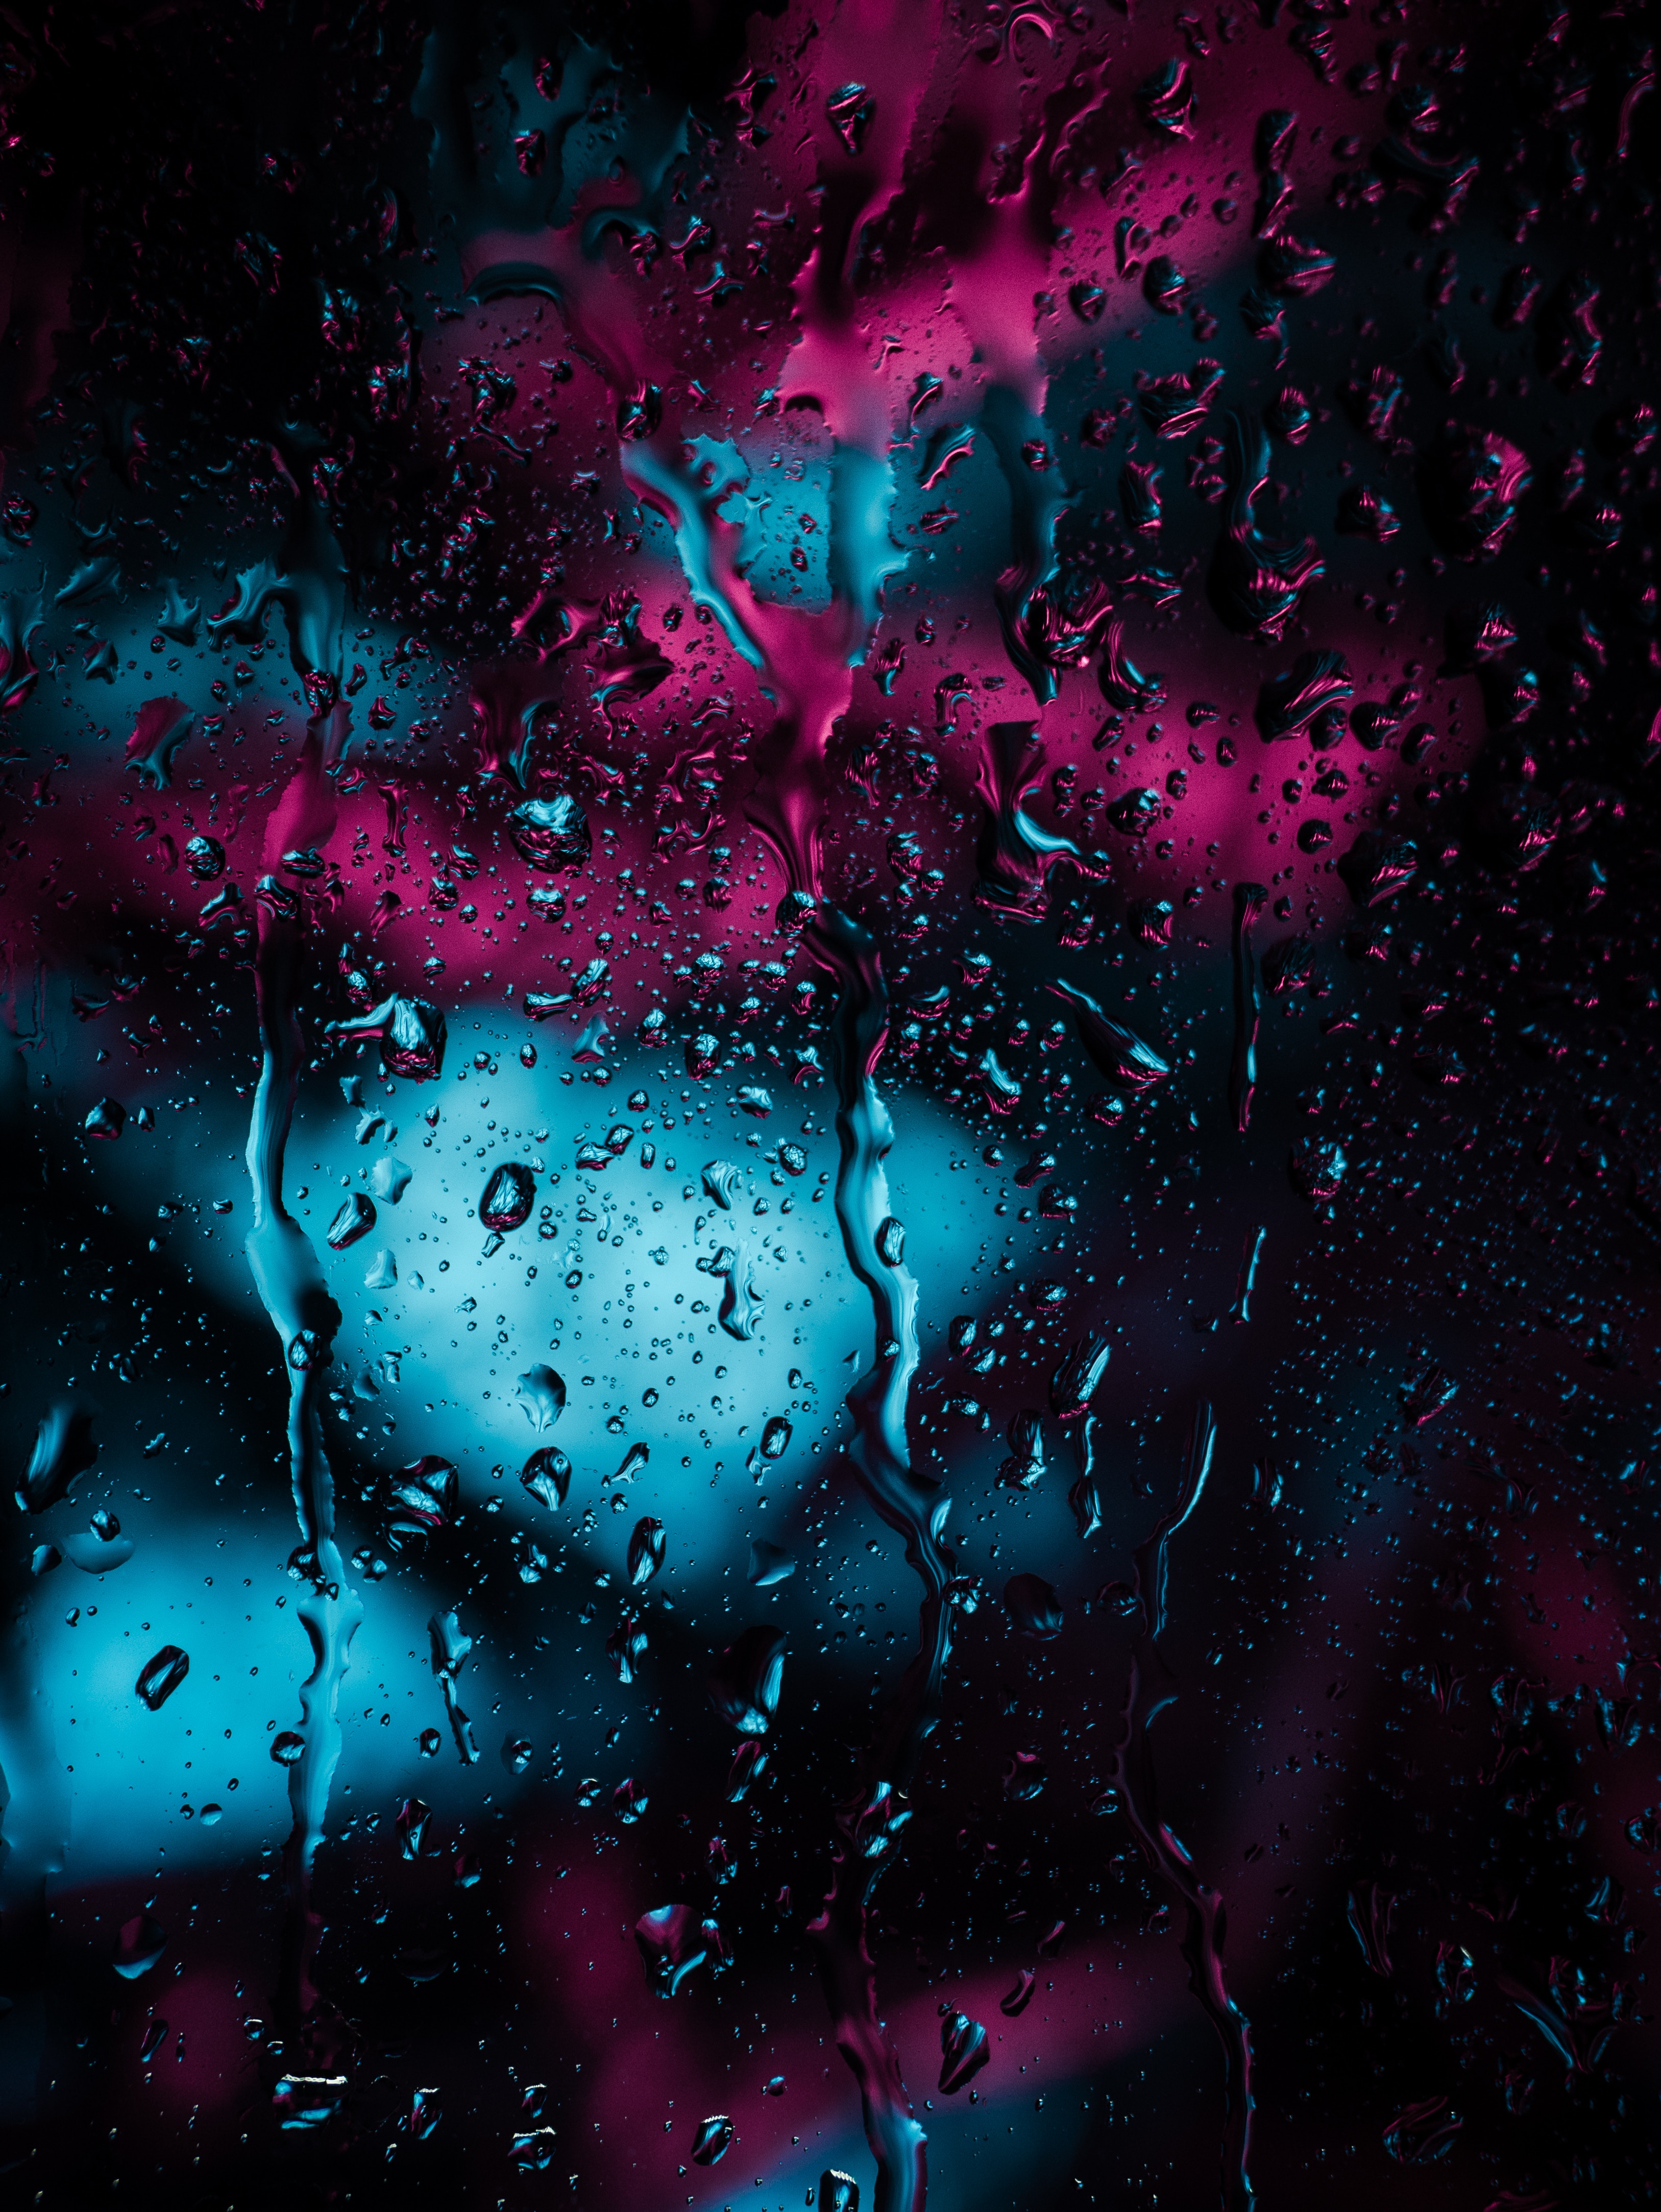 dark, moisture, drops, glass, rain, macro, surface cell phone wallpapers